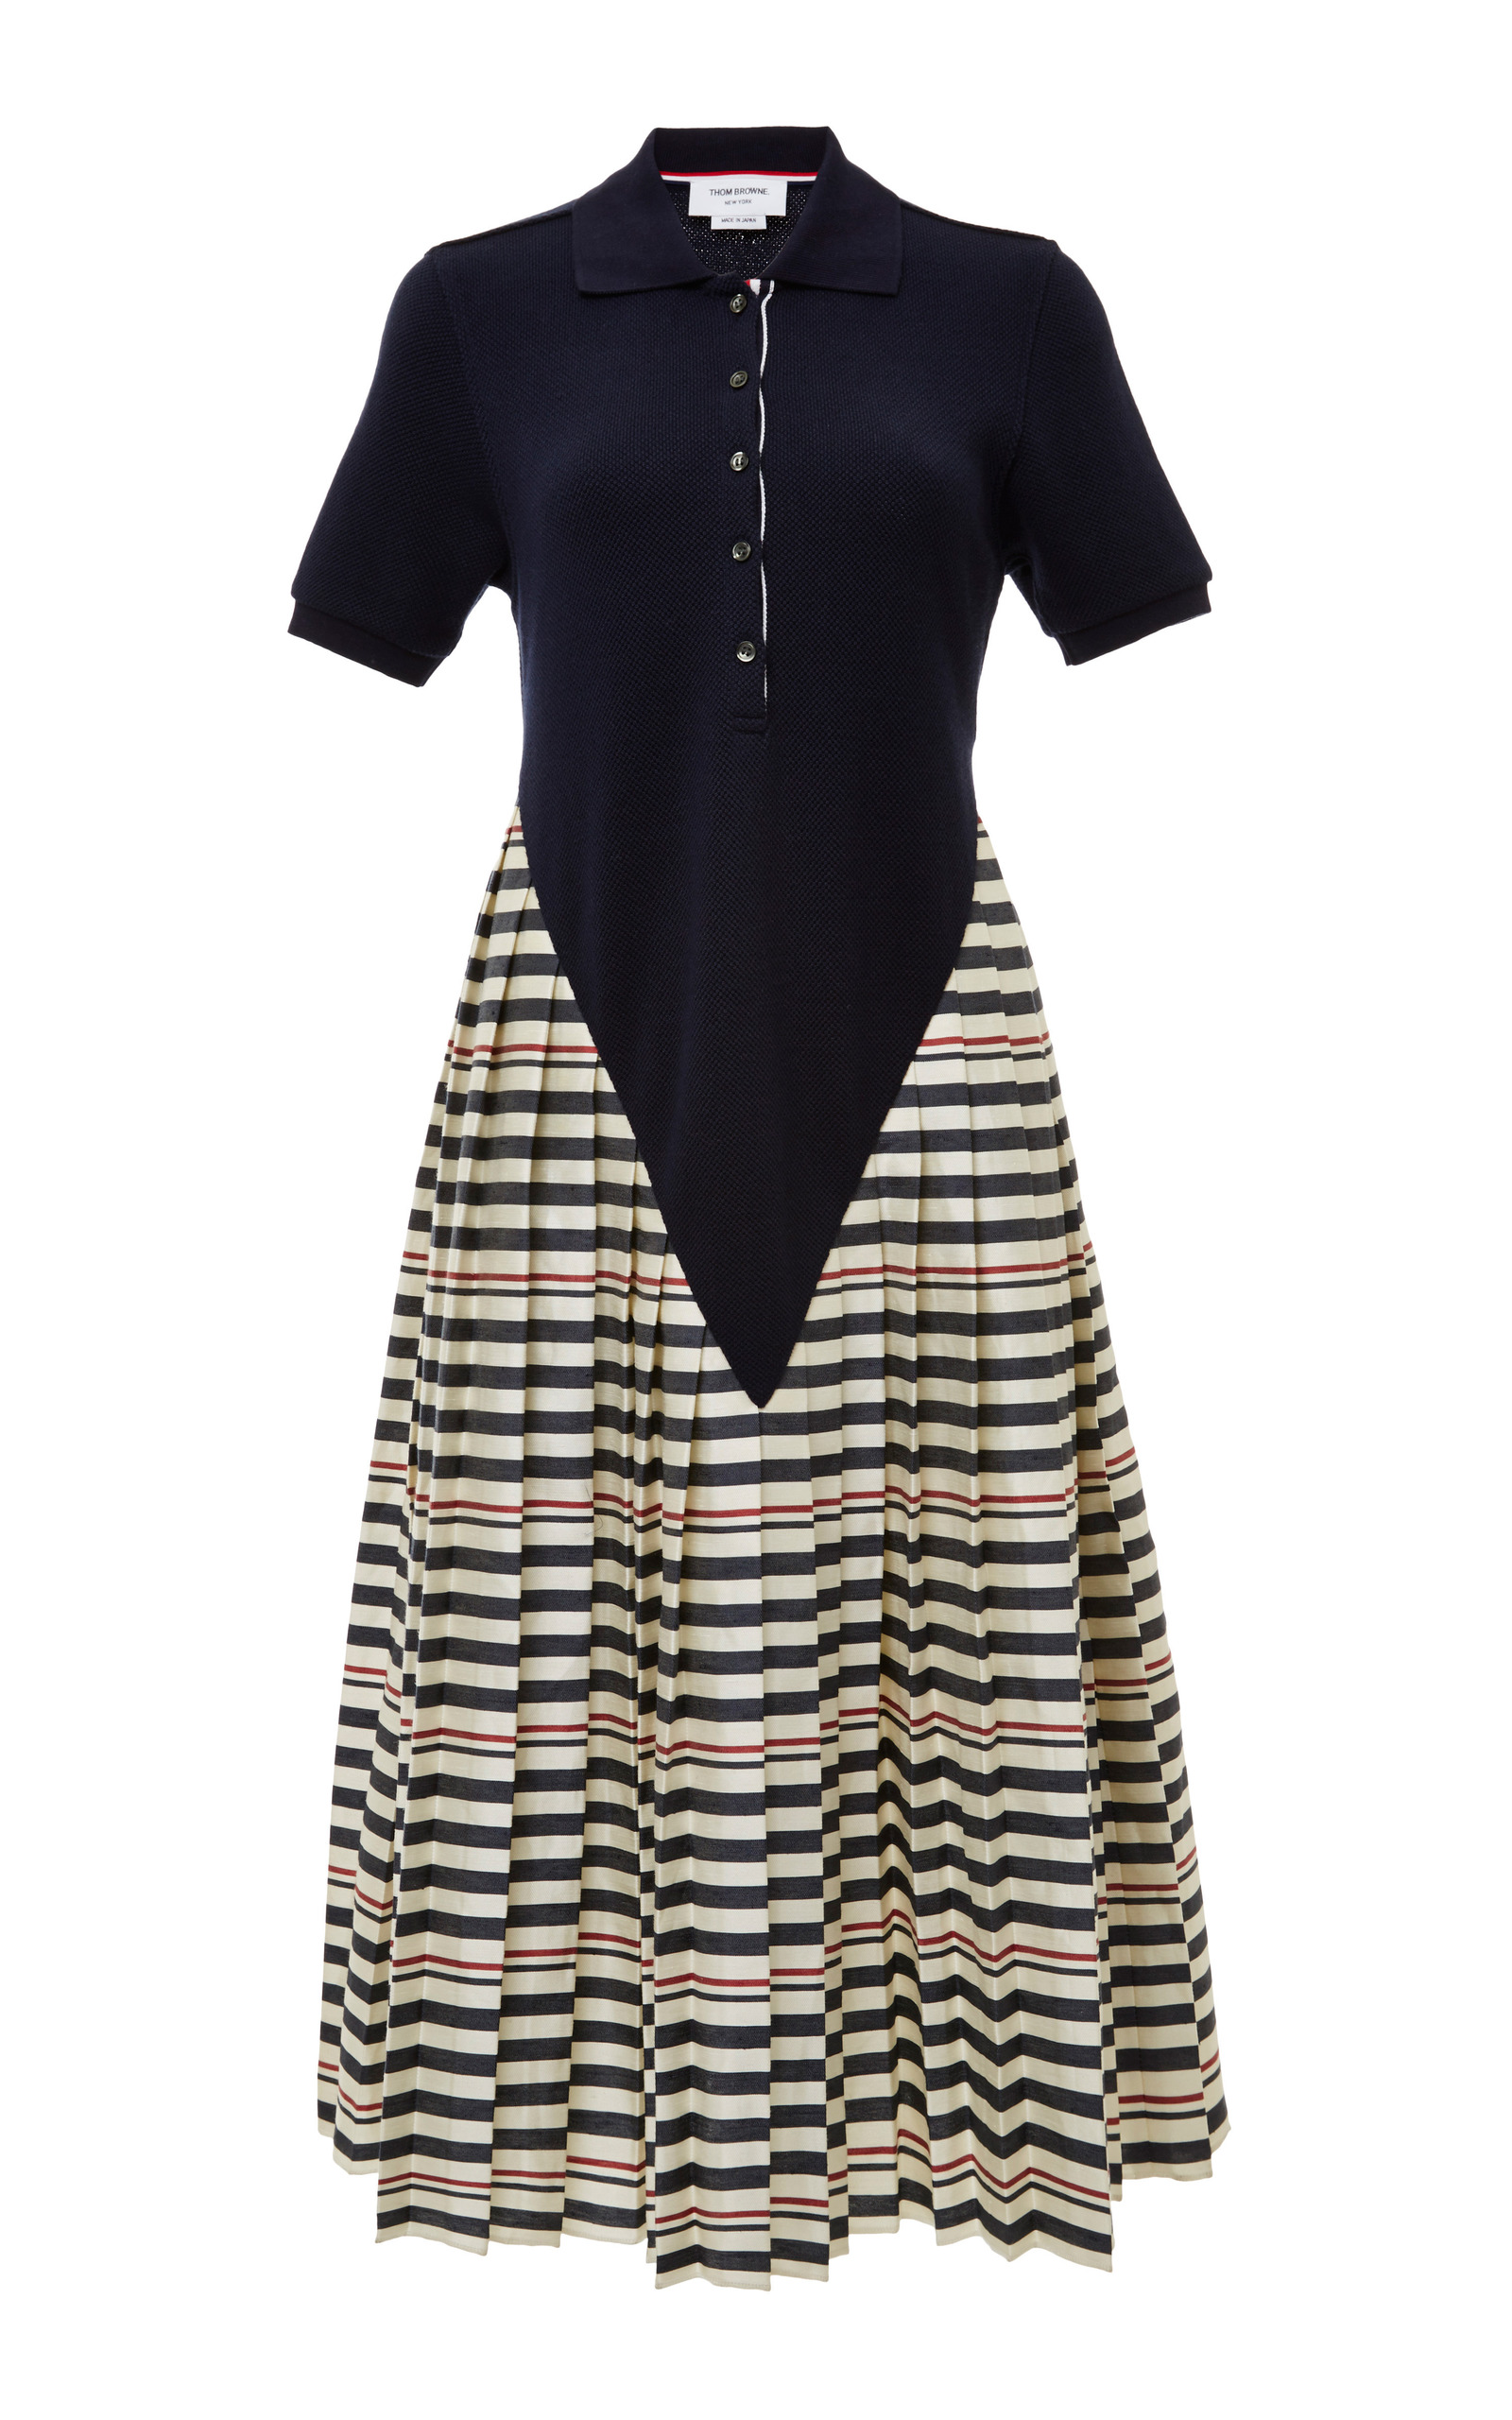 polo skirt dress